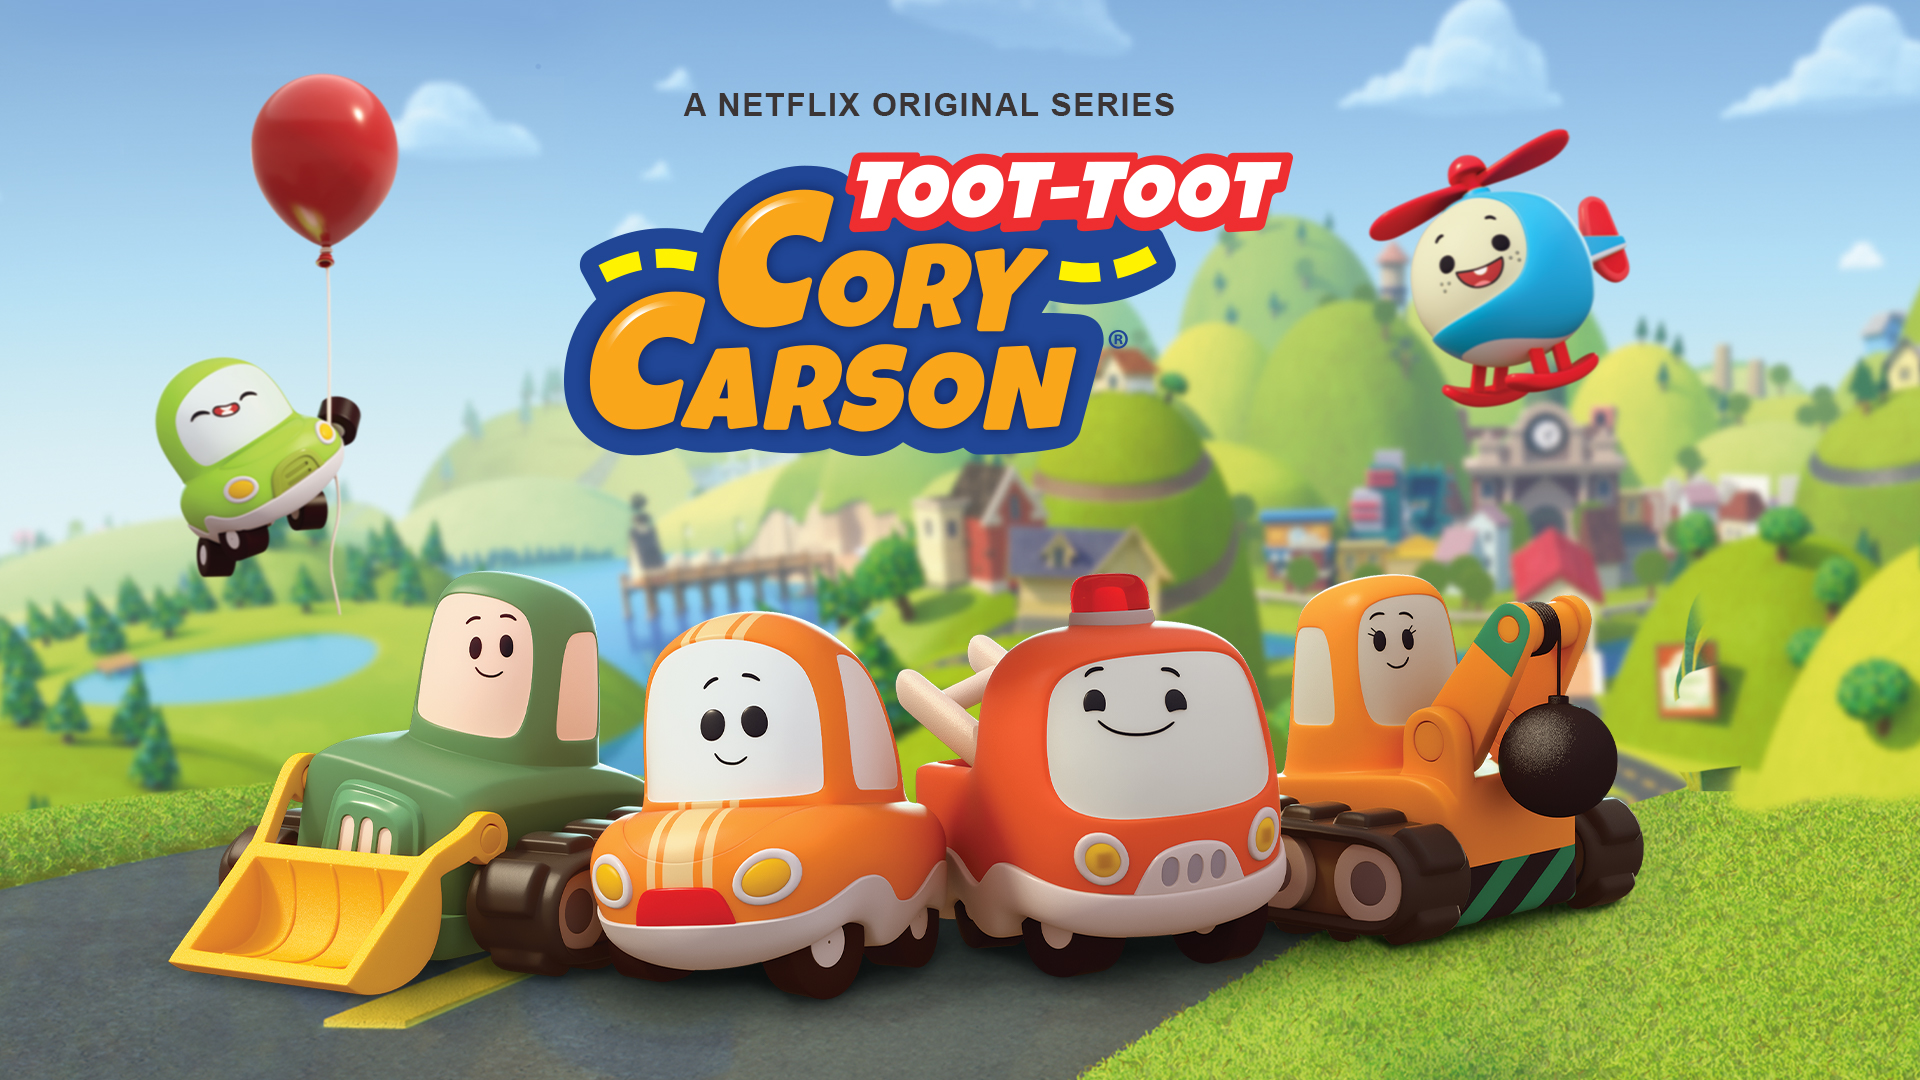 A Netflix original series. Toot-Toot Cory Carson. January 4